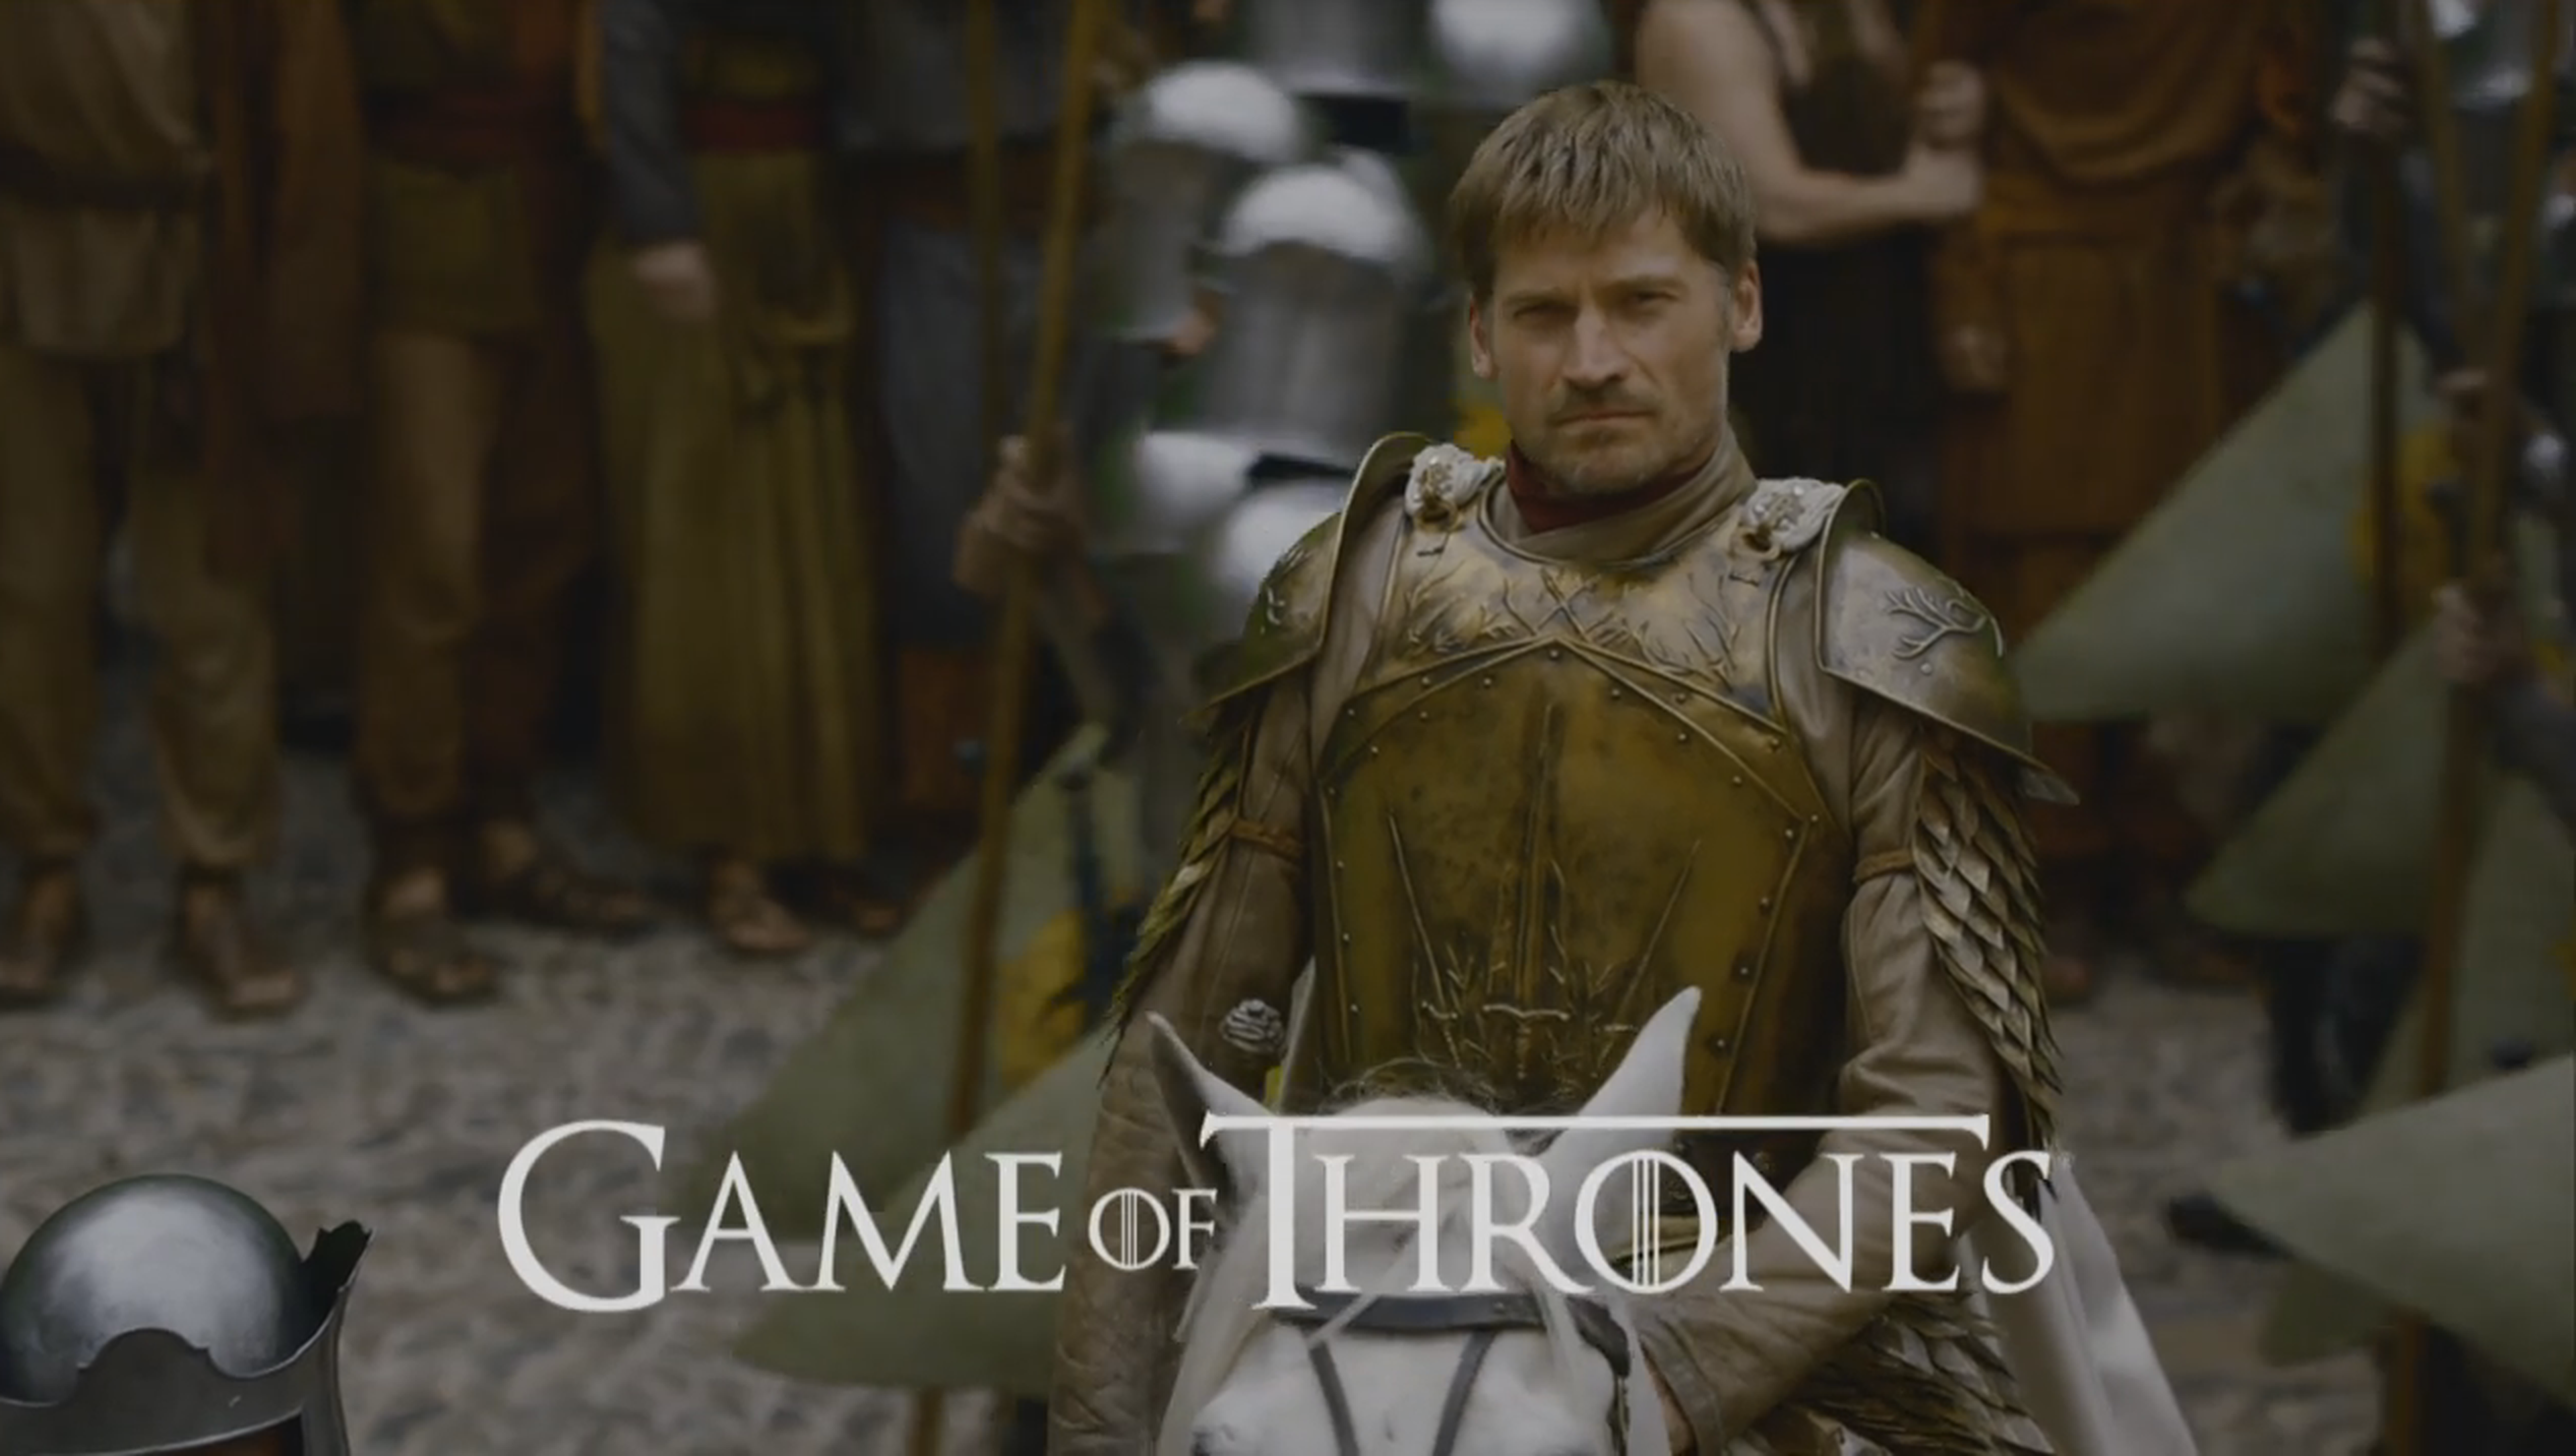 Juego de Tronos temporada 6: Primera imagen oficial de Jaime Lannister (spoiler)